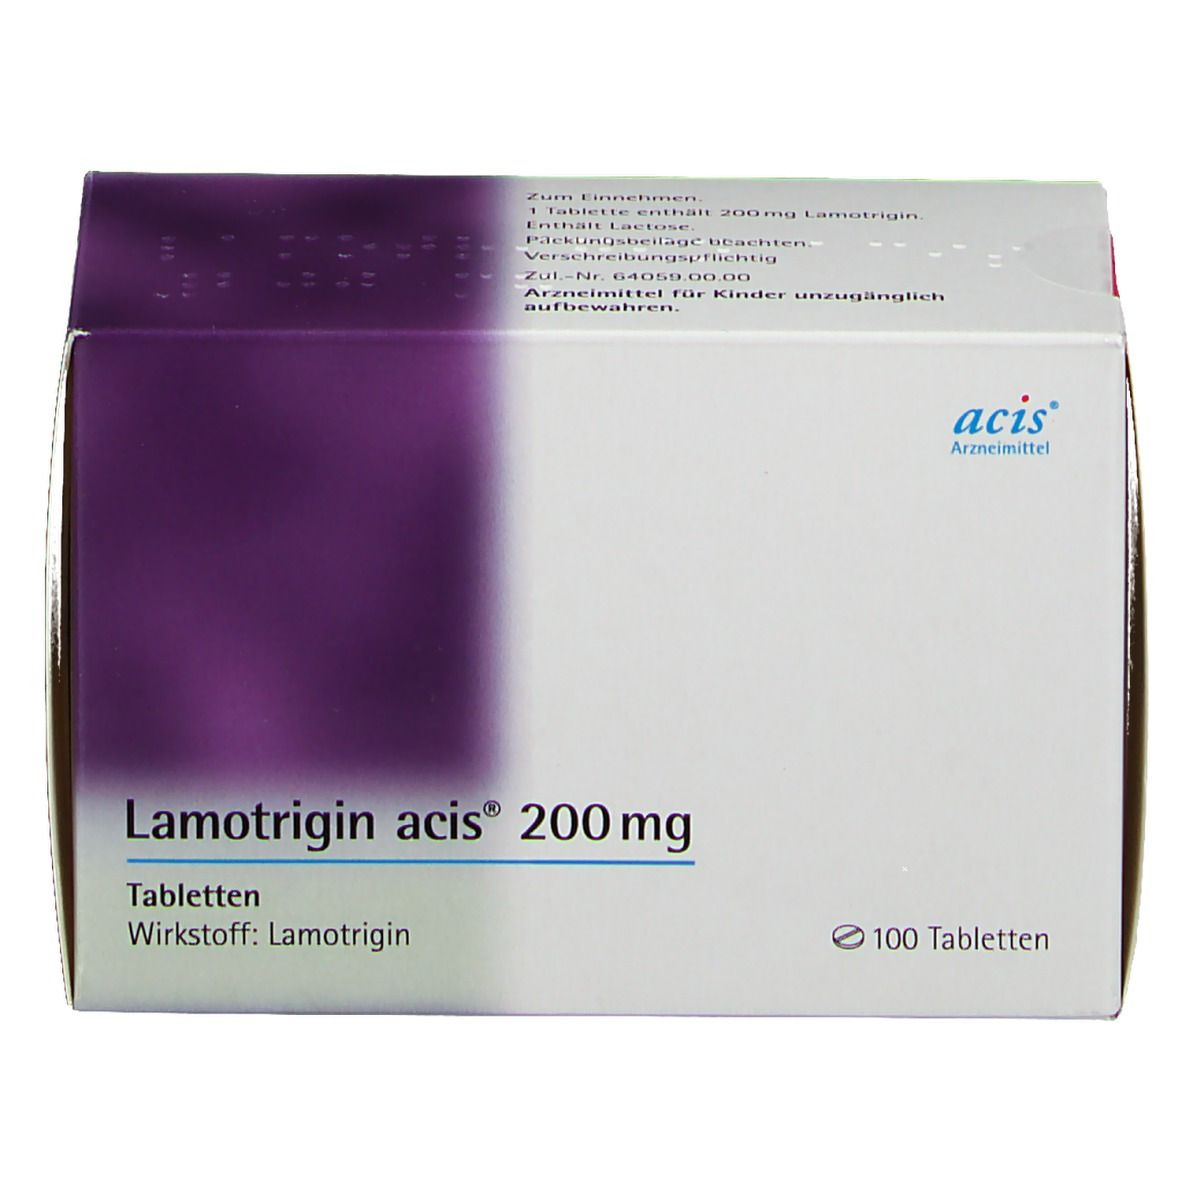 Lamotrigin acis® 200Mg